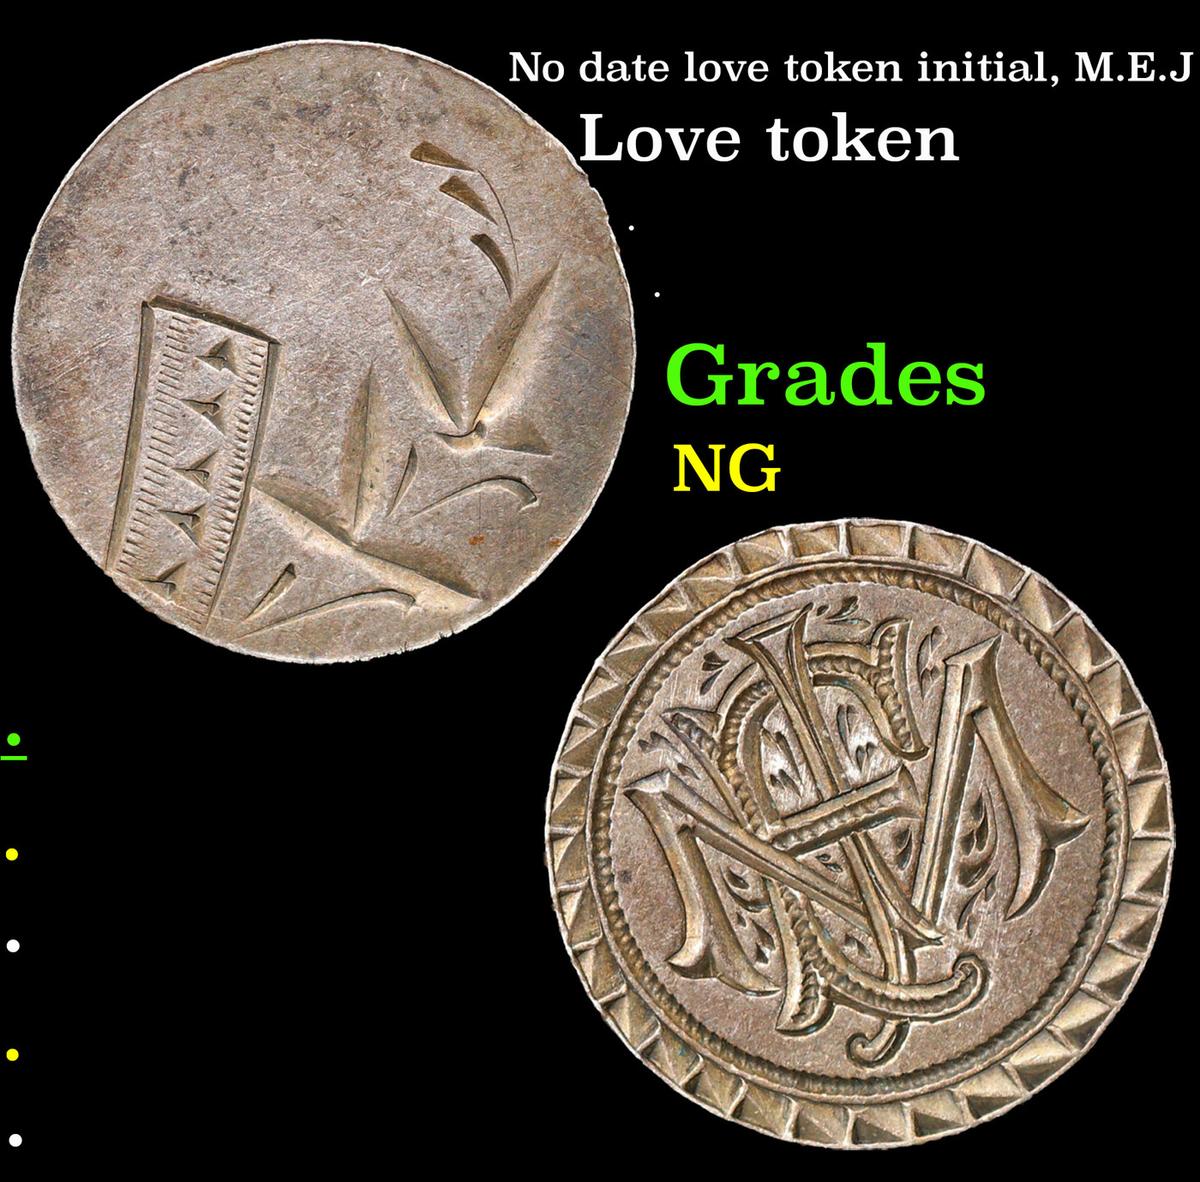 No date love token initial, M.E.J Grades NG